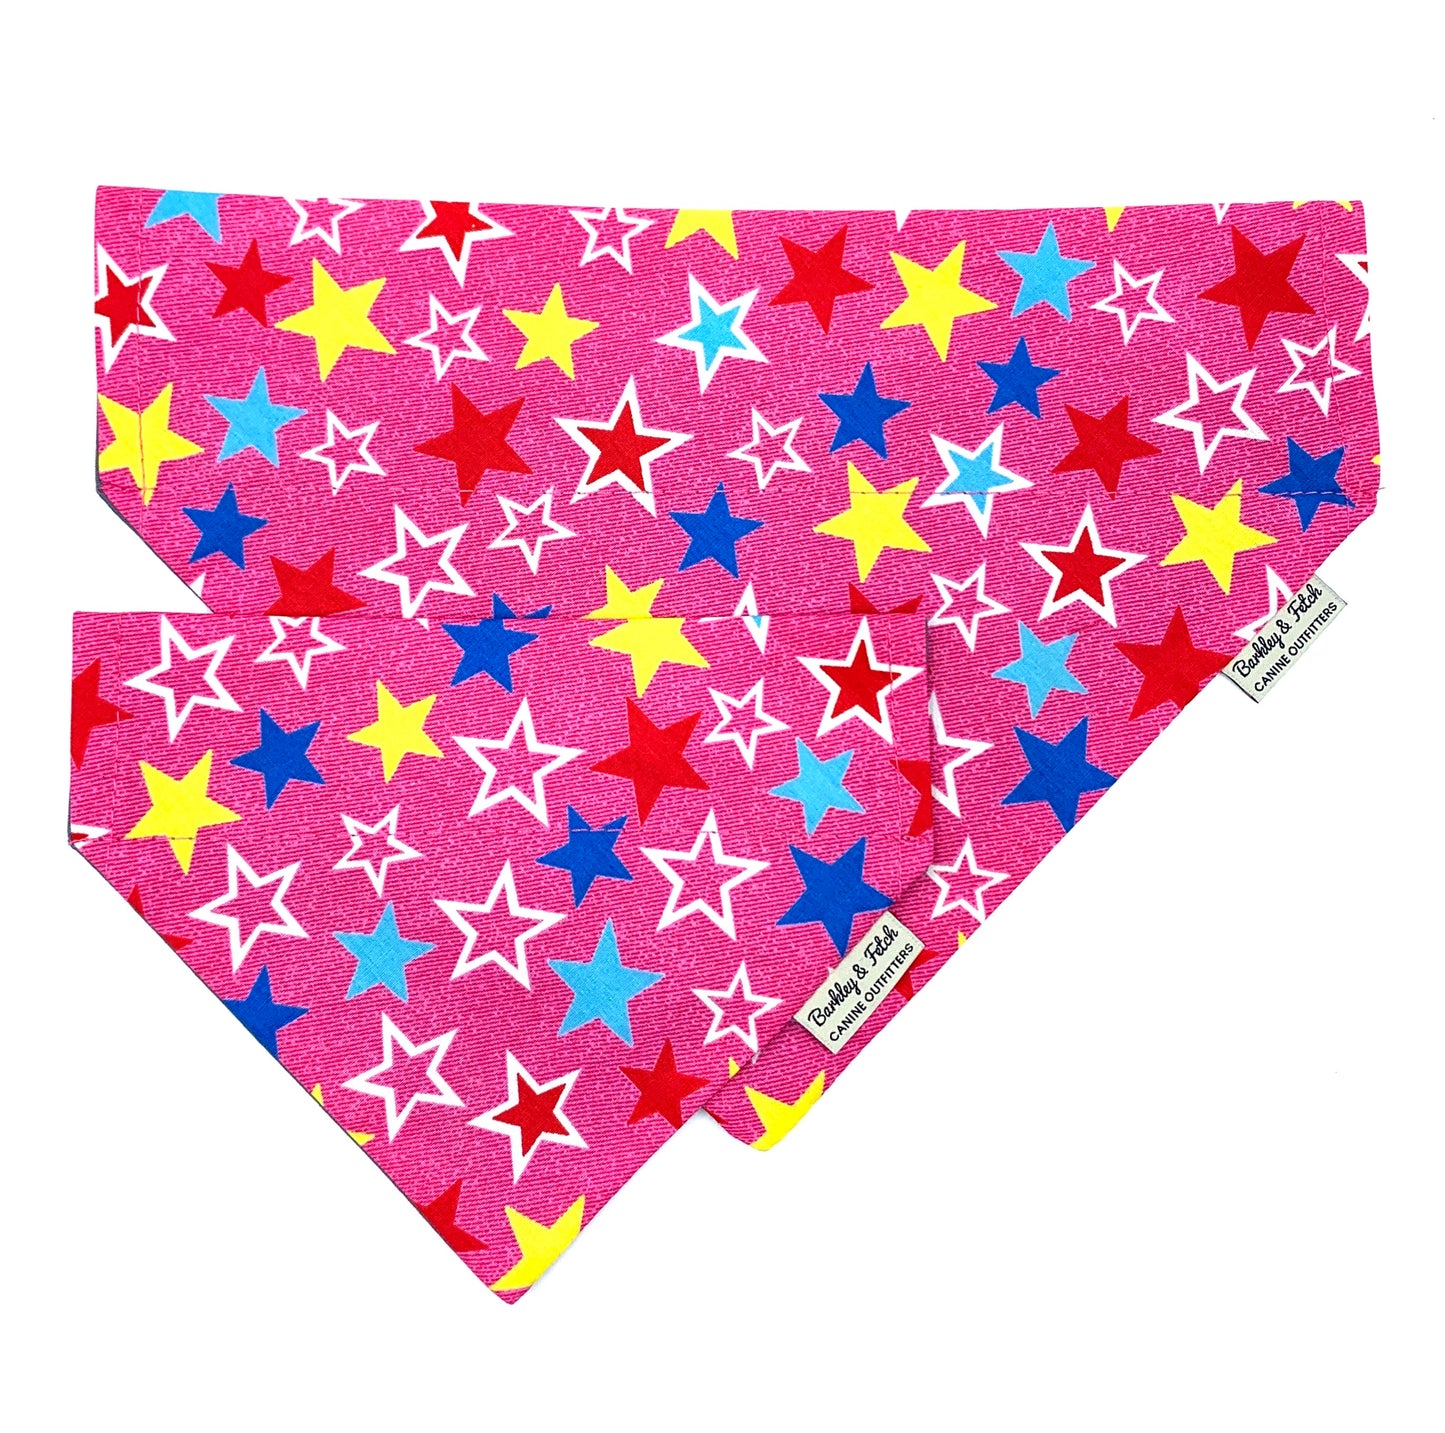 Pink Star Print Dog Bandana